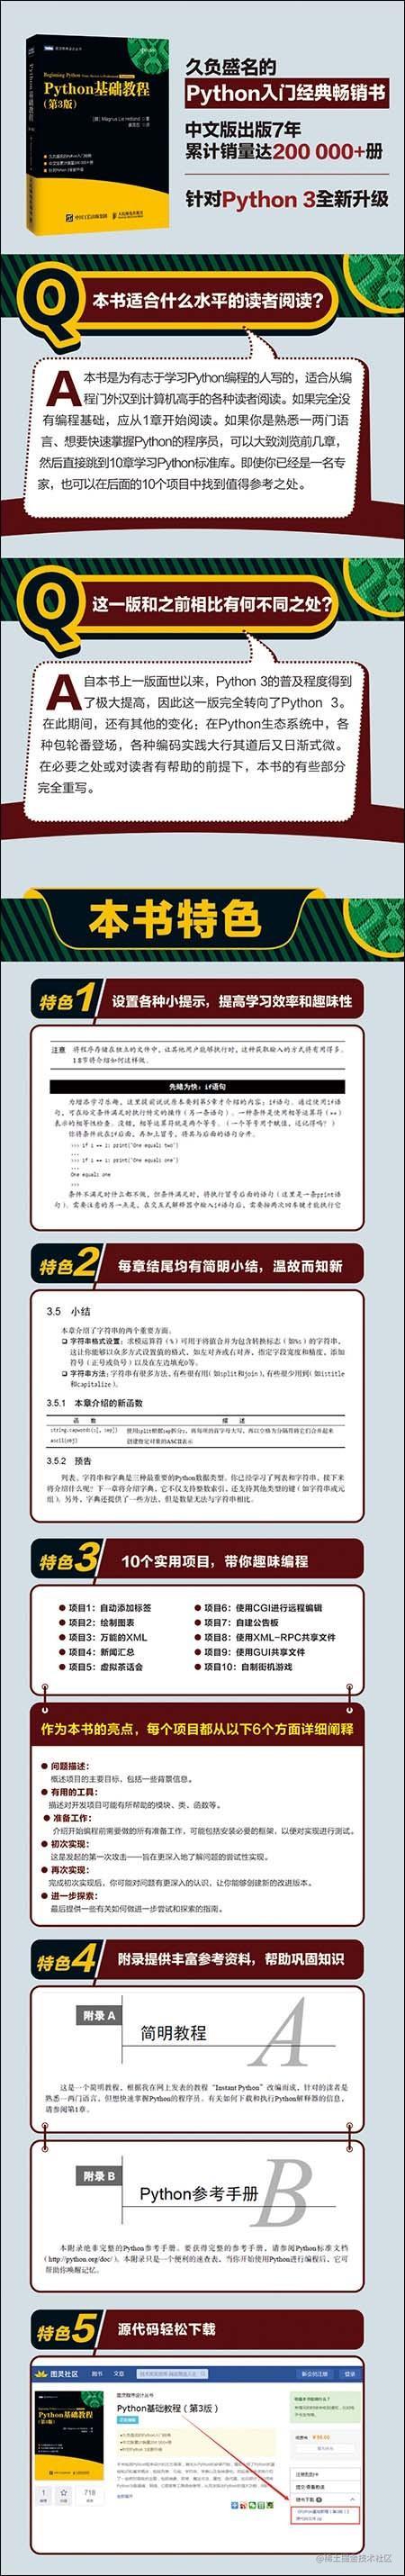 Python 3 7极速入门教程9最佳python中文书籍下载 掘金